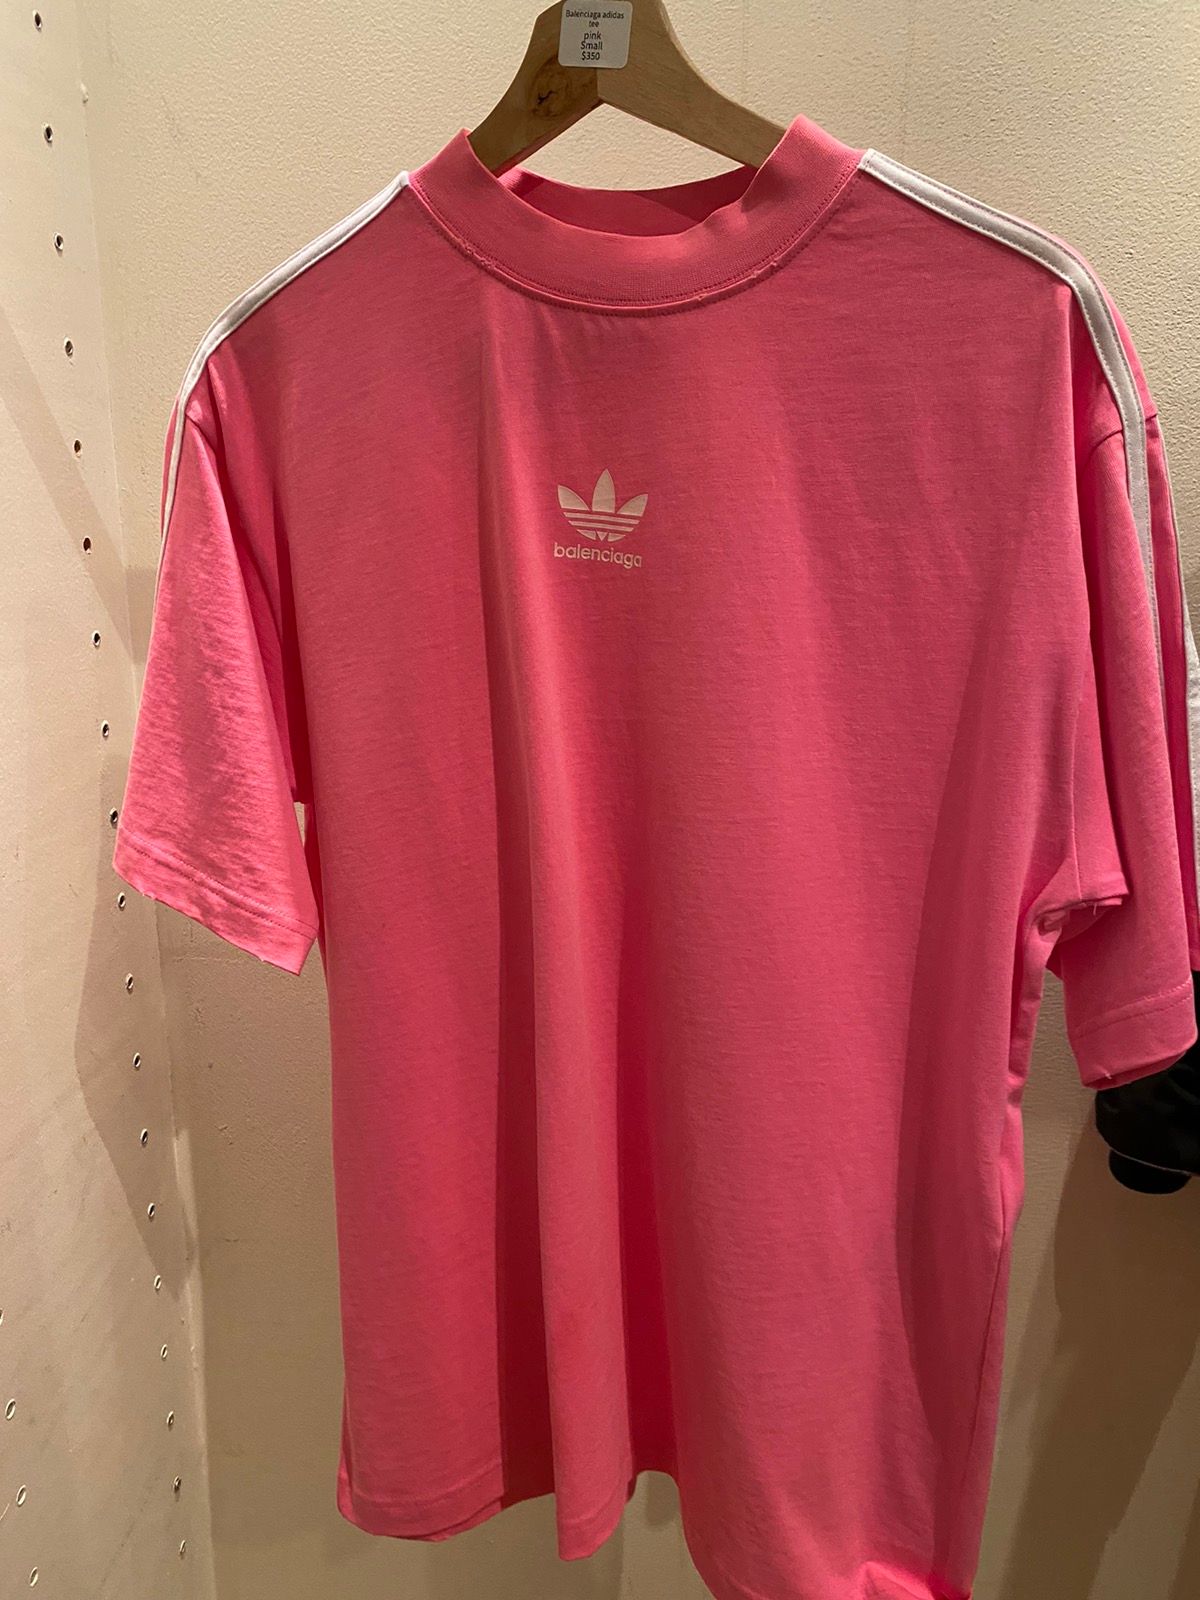 Pre-owned Adidas X Balenciaga Adidas Tee Pink